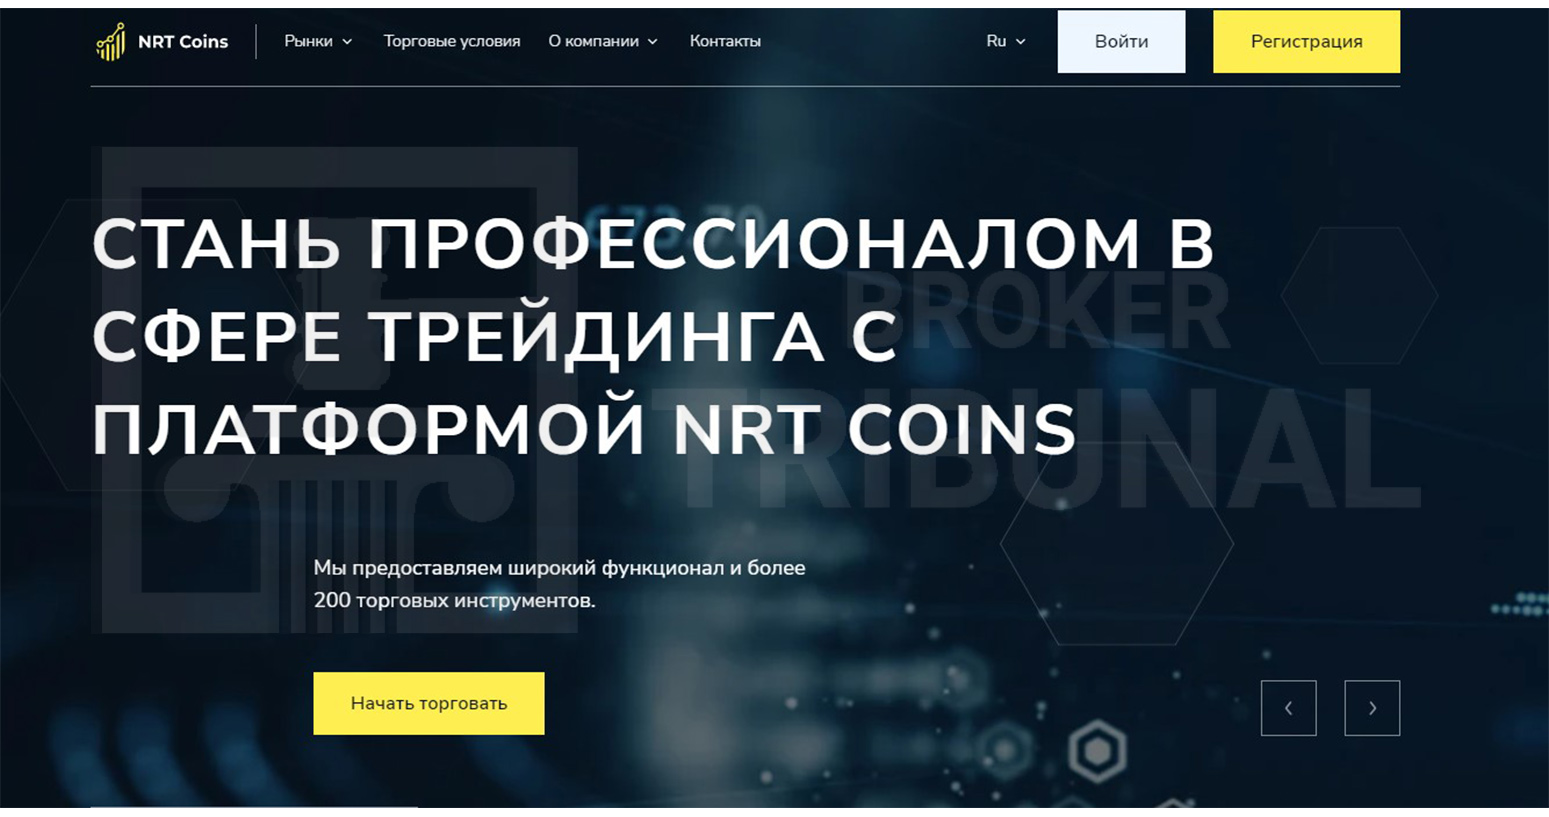 NRT Coins